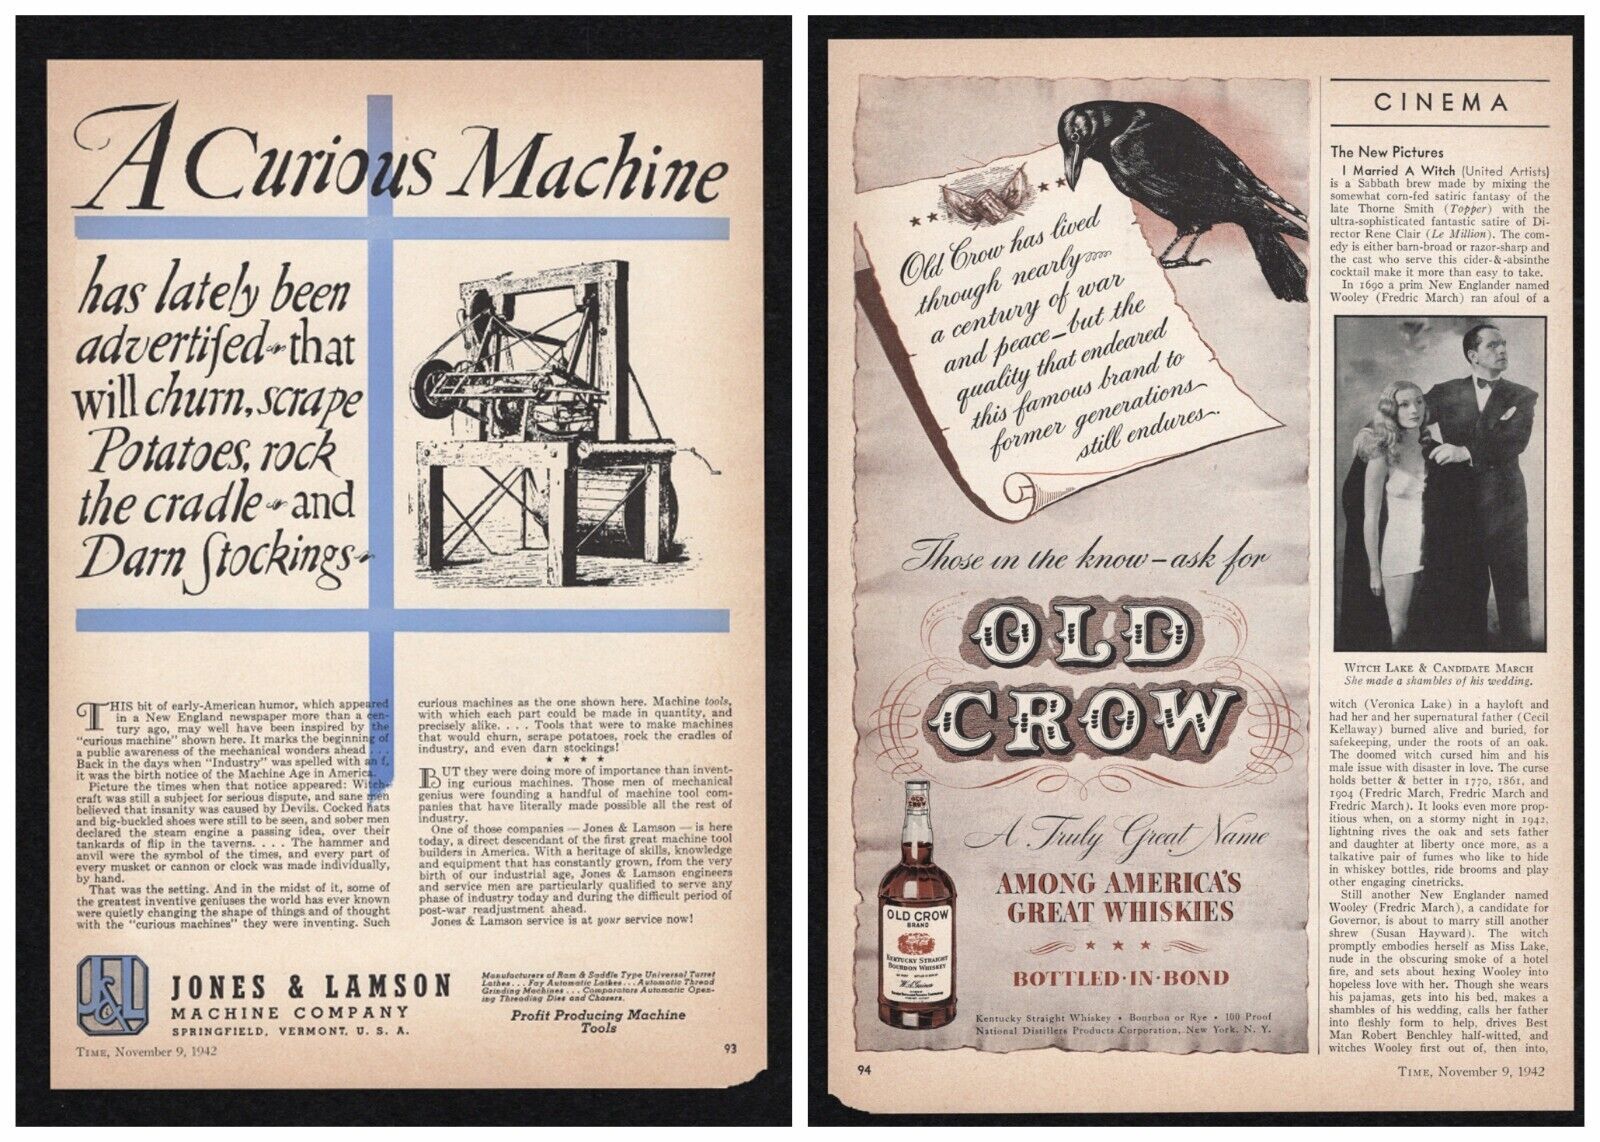 1942 Jones Lamson A Curious Machine / Old Crow America Great Whiskies Print Ad